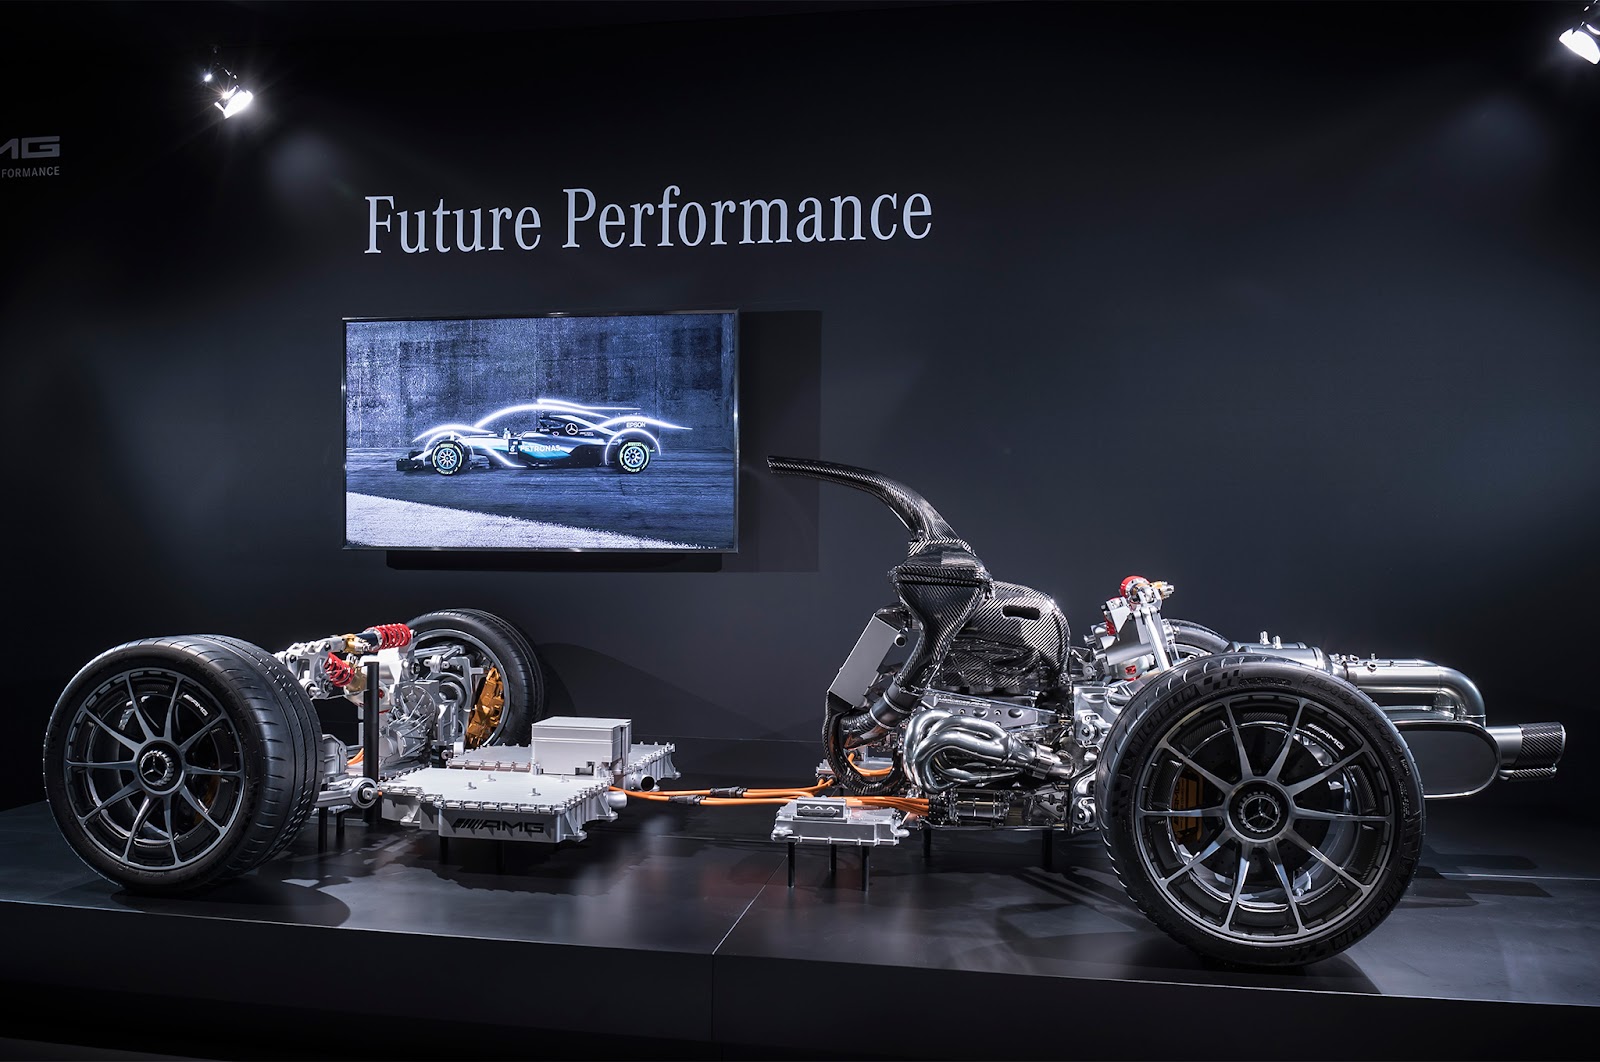 2019-Mercedes-AMG-Project-One-Powertrain-03.jpg